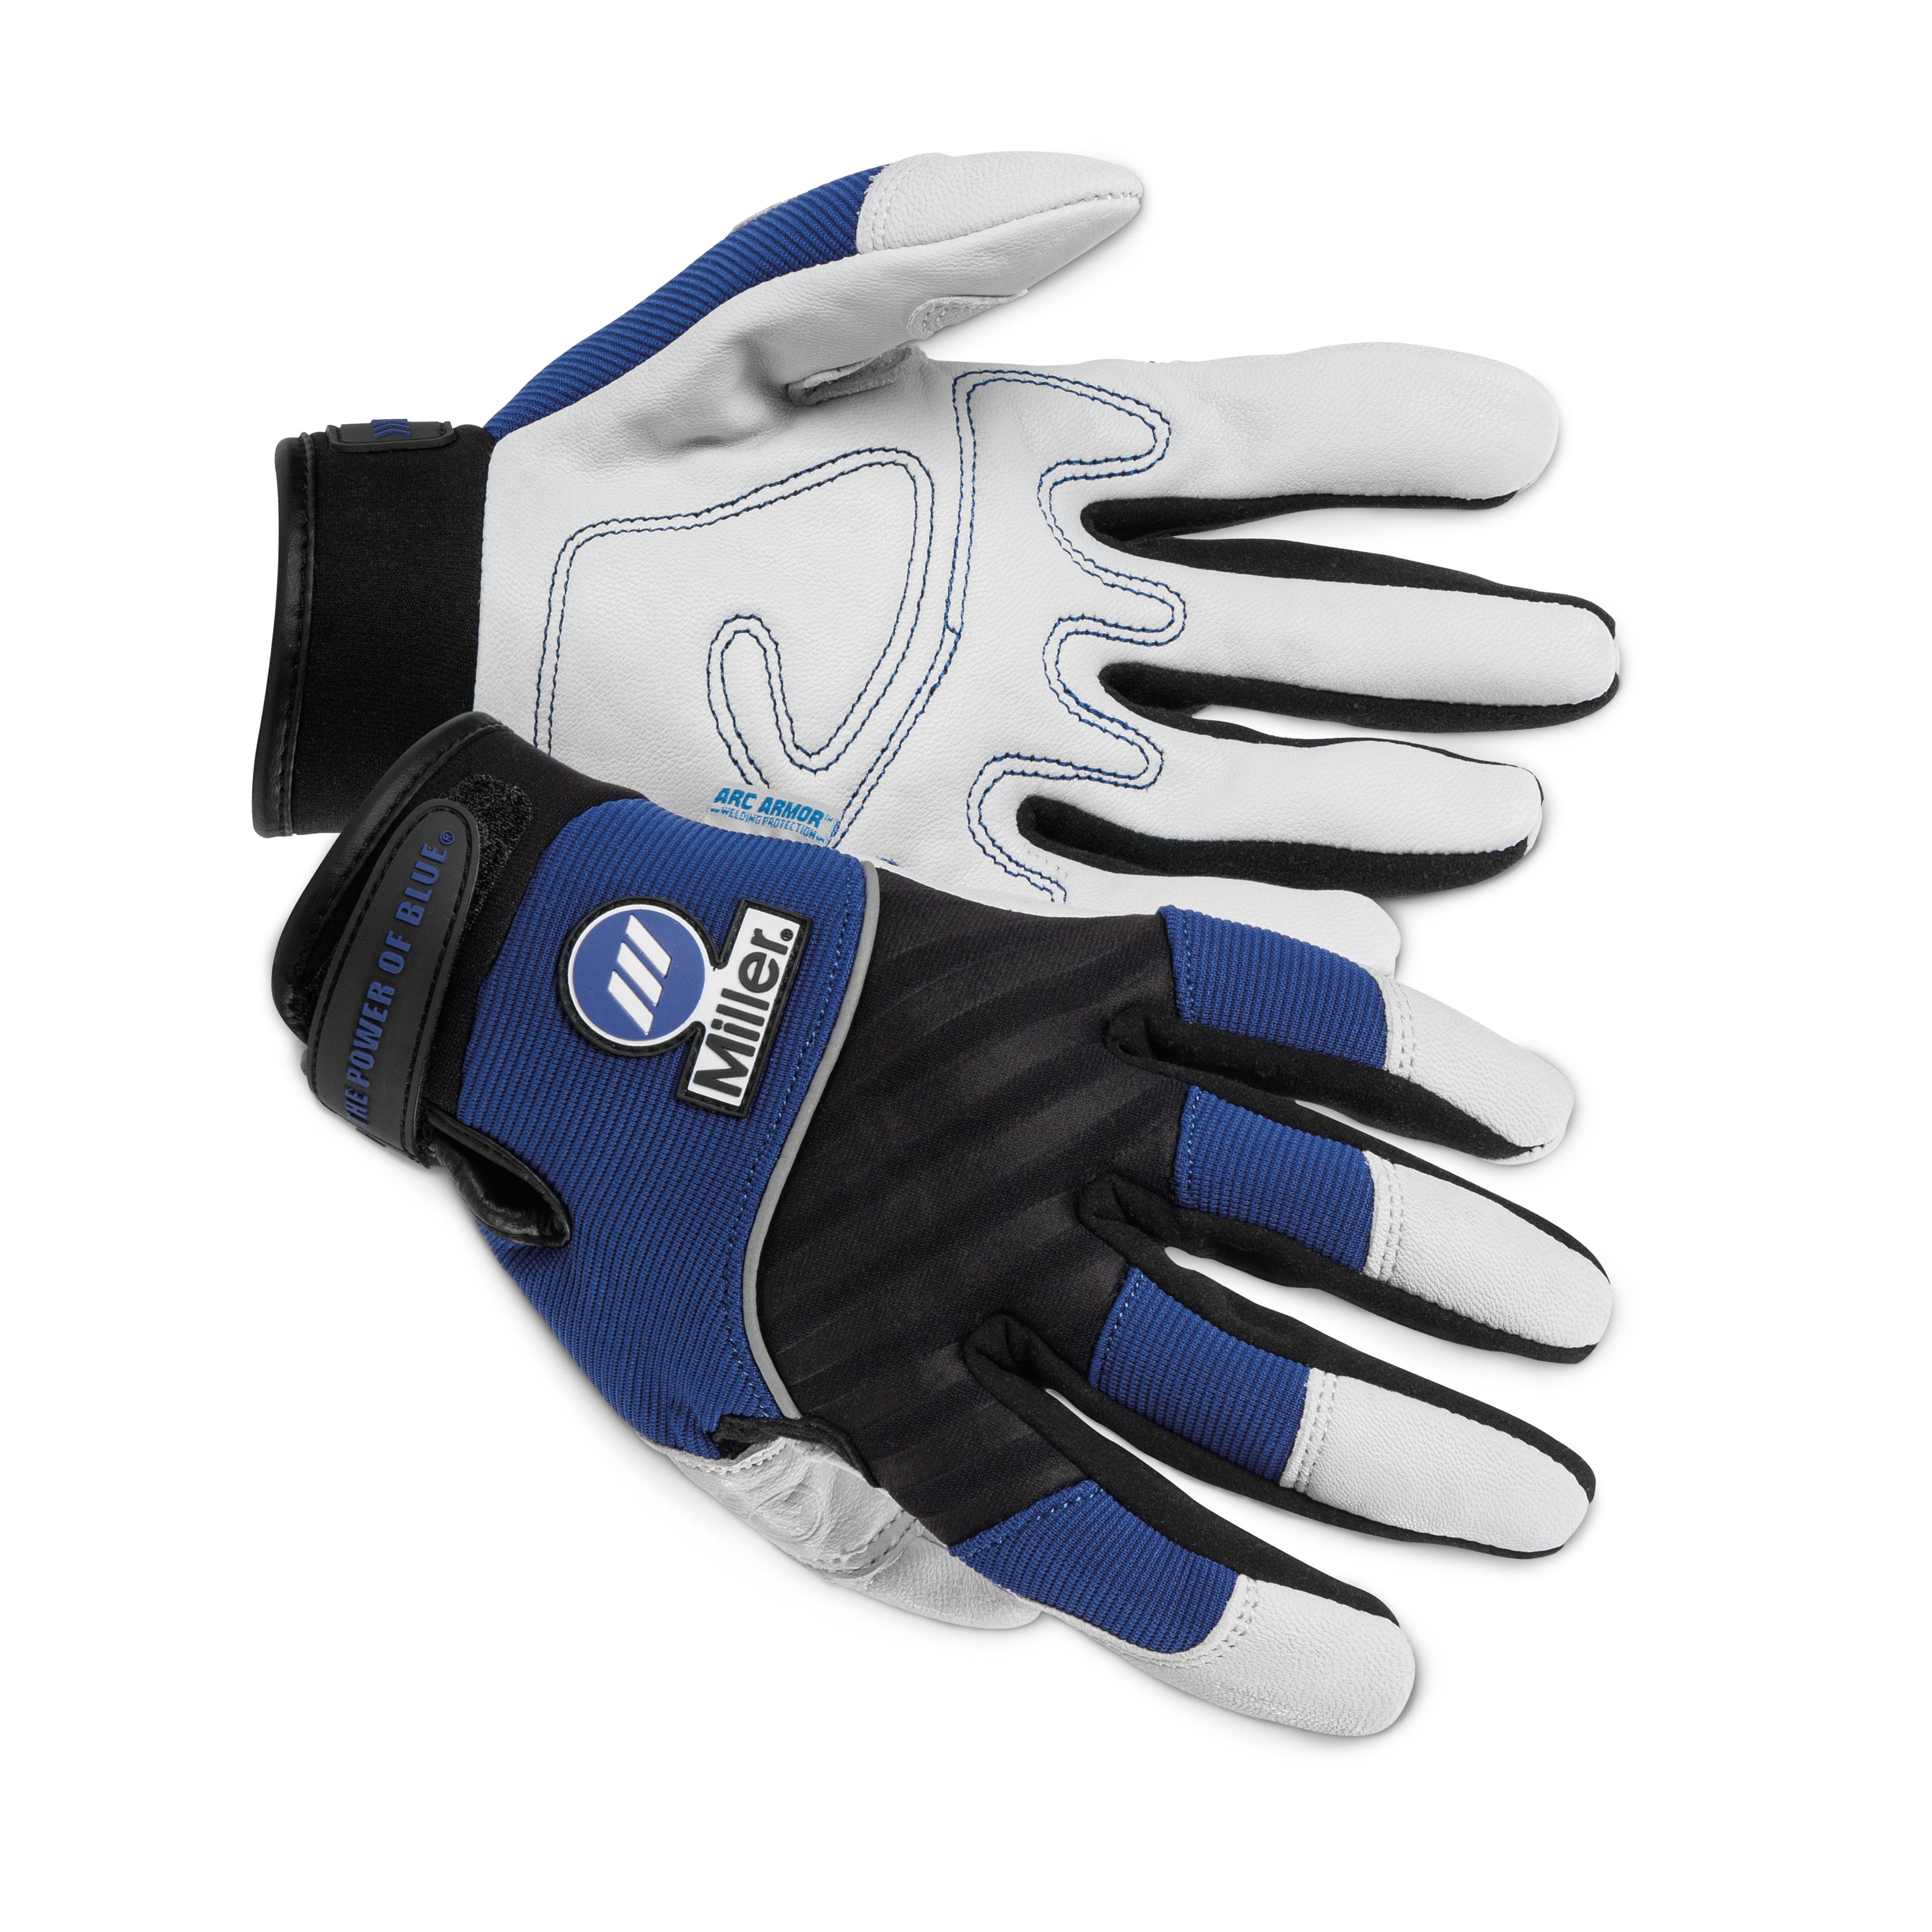 Miller Metalworker Gloves